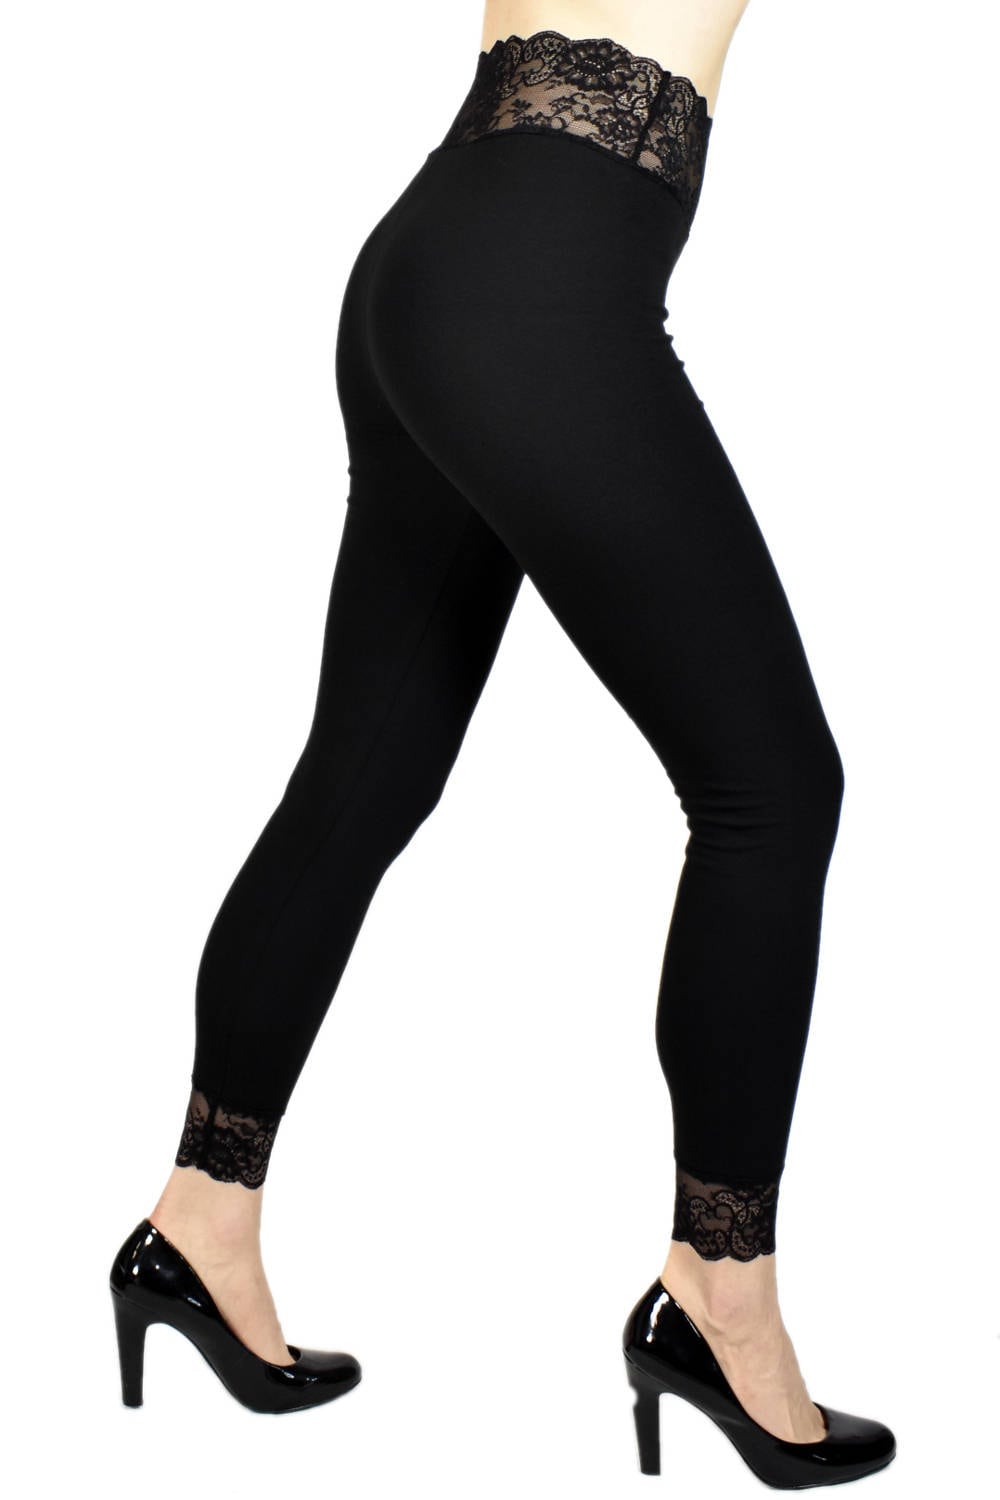 Black Cotton Spandex Lace-waist Leggings XS S M L XL 2XL 3XL 4XL Plus Size  Stretch High Waist High-waisted With Black Lace Trim Goth Gothic 